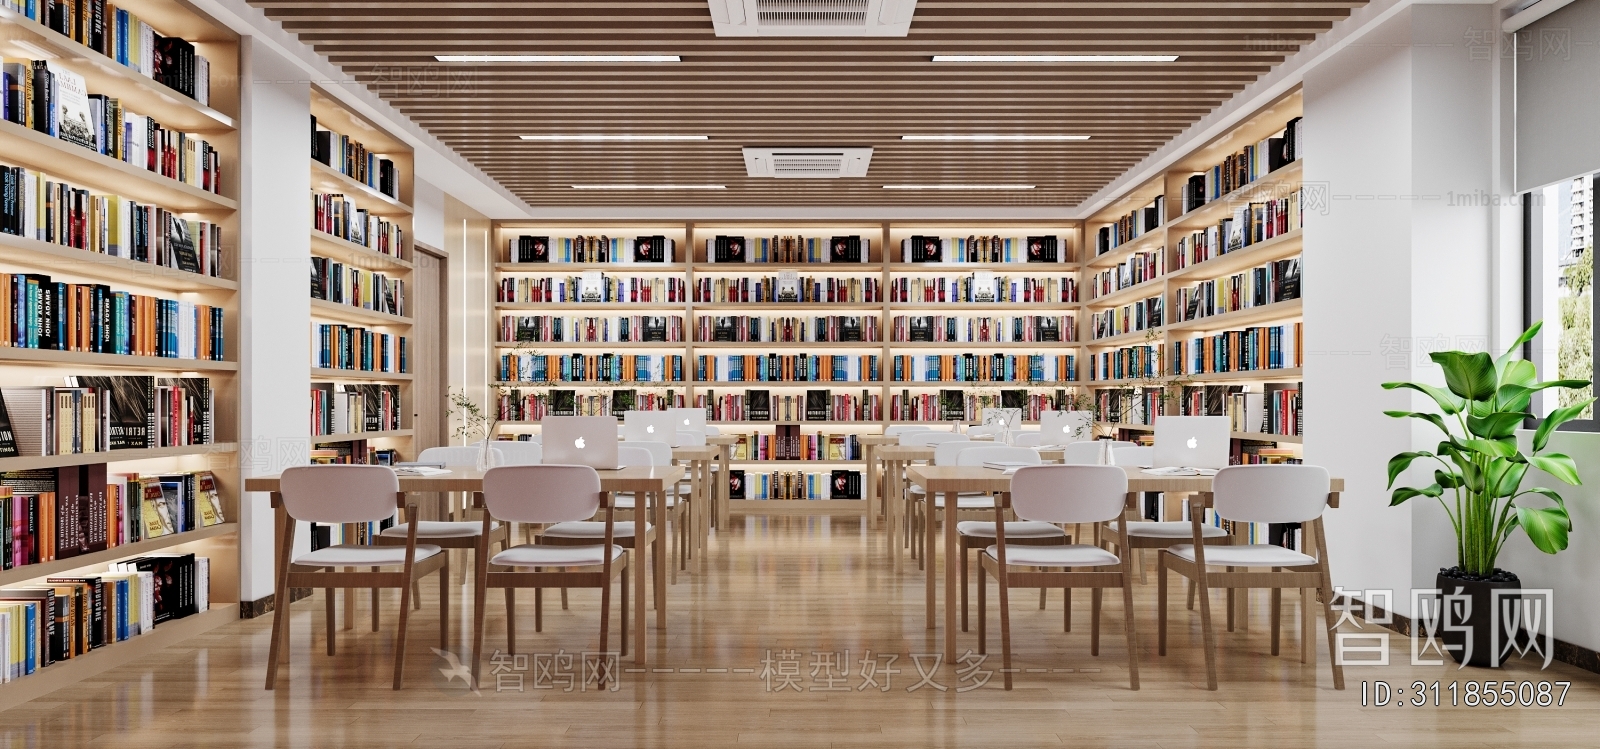 现代图书阅览室